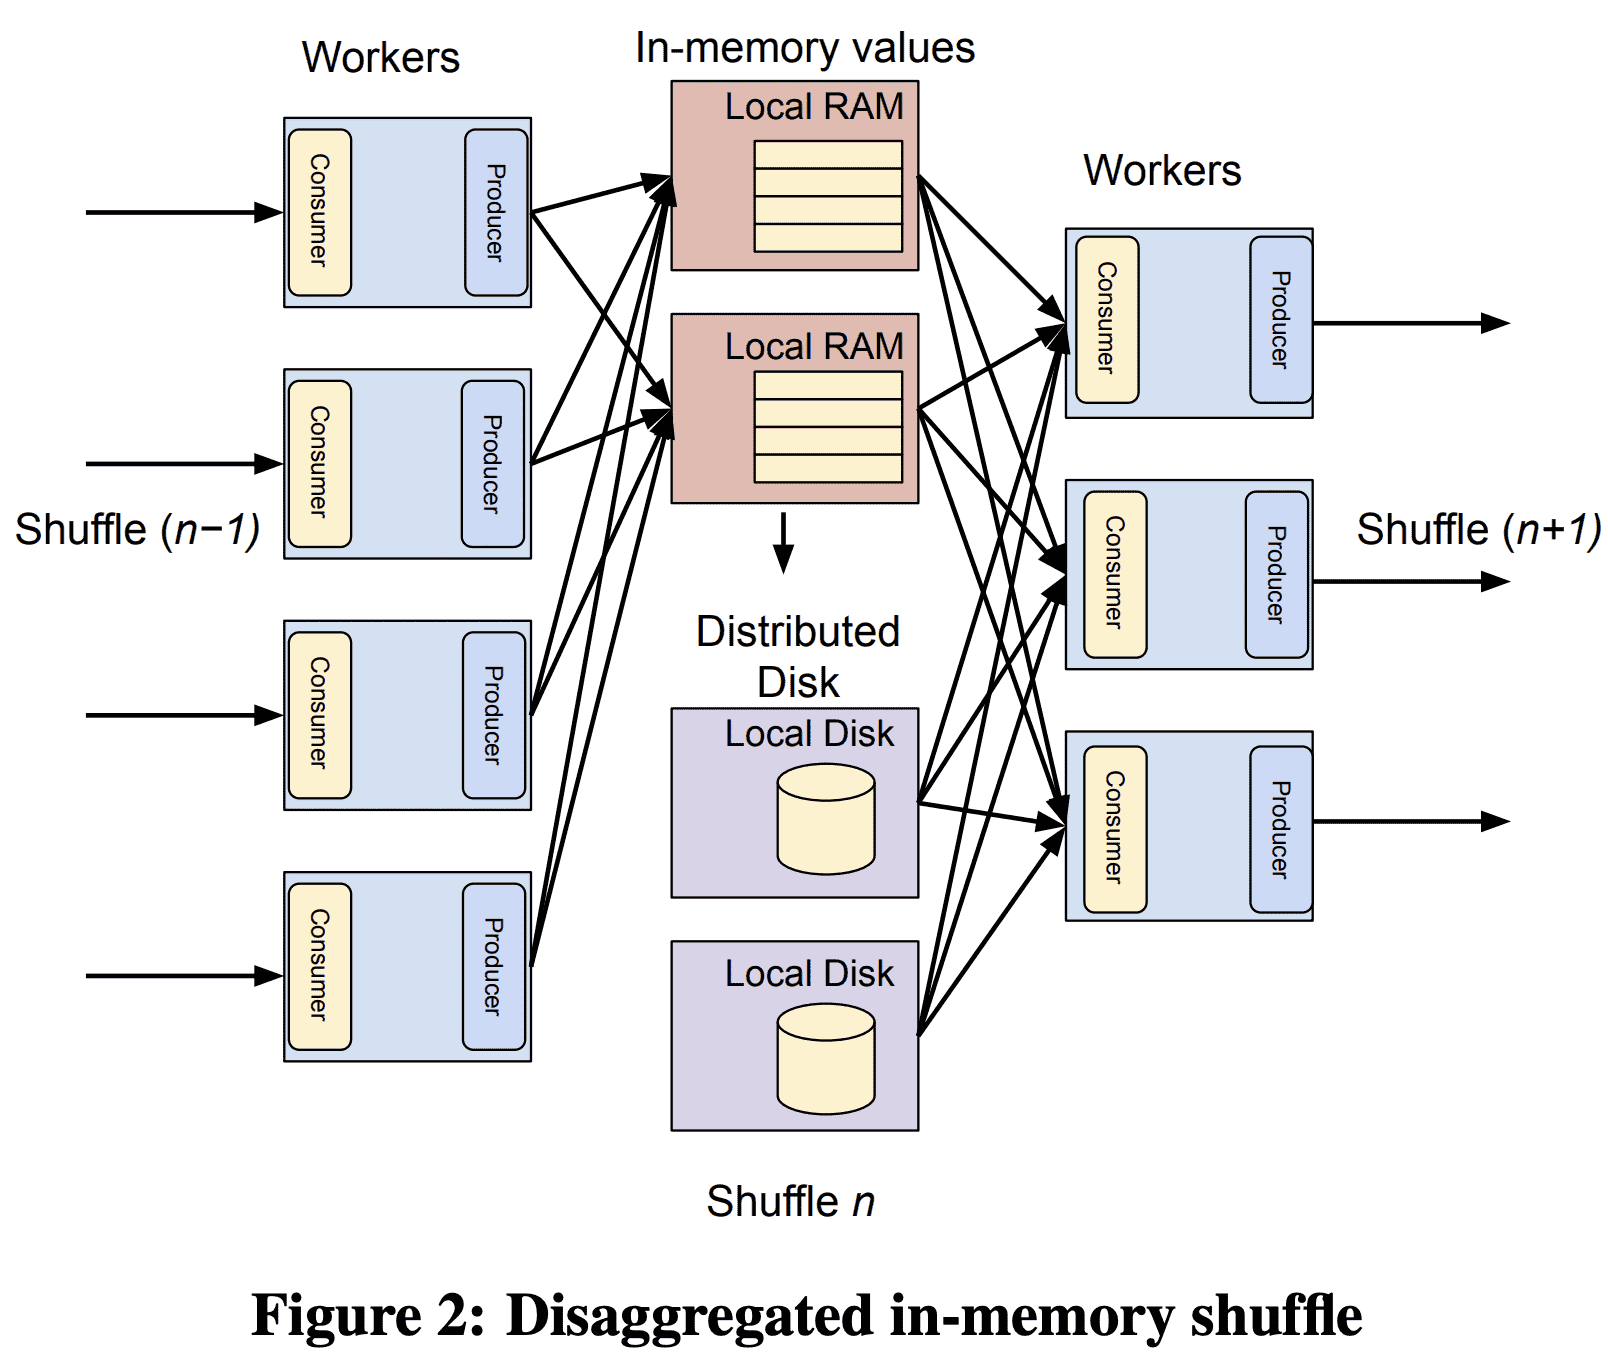 Disaggregated in-memory shuffle